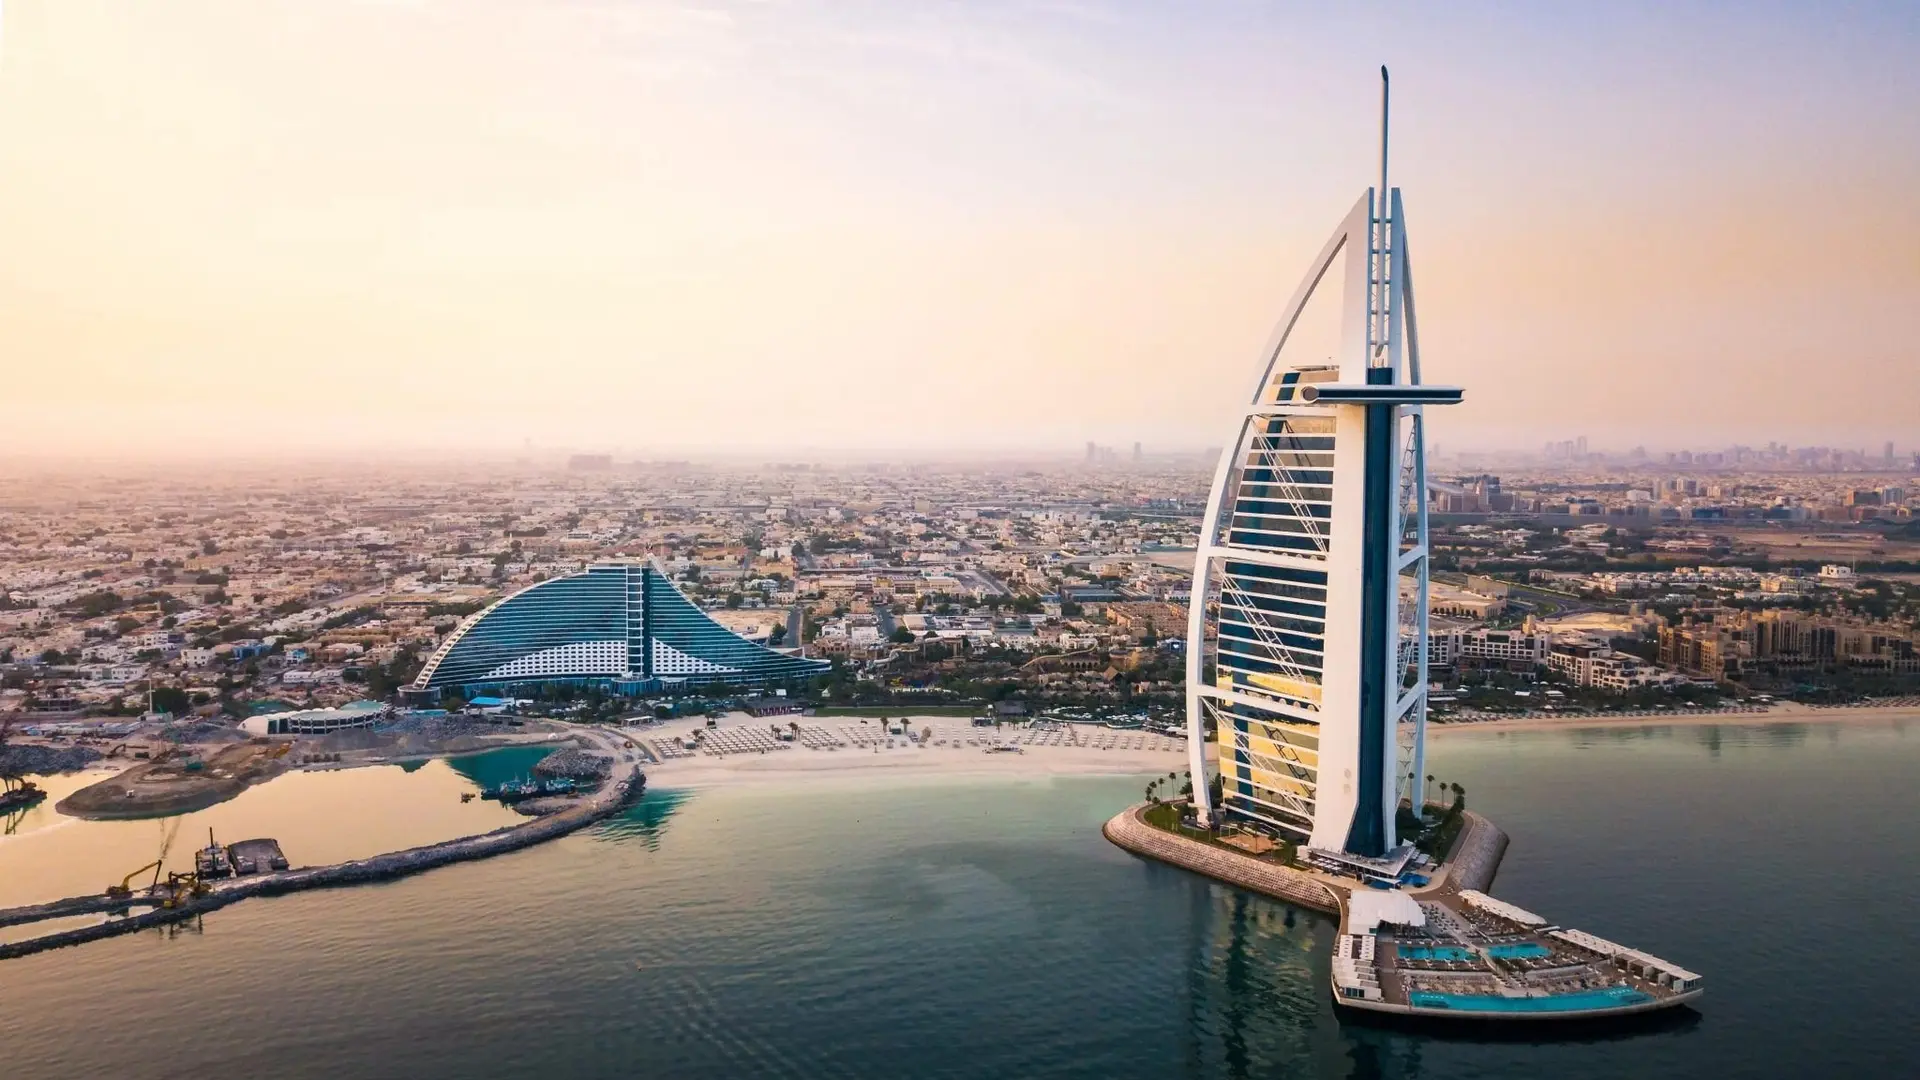 Destinations Toplists - 10 Best Spas in Dubai